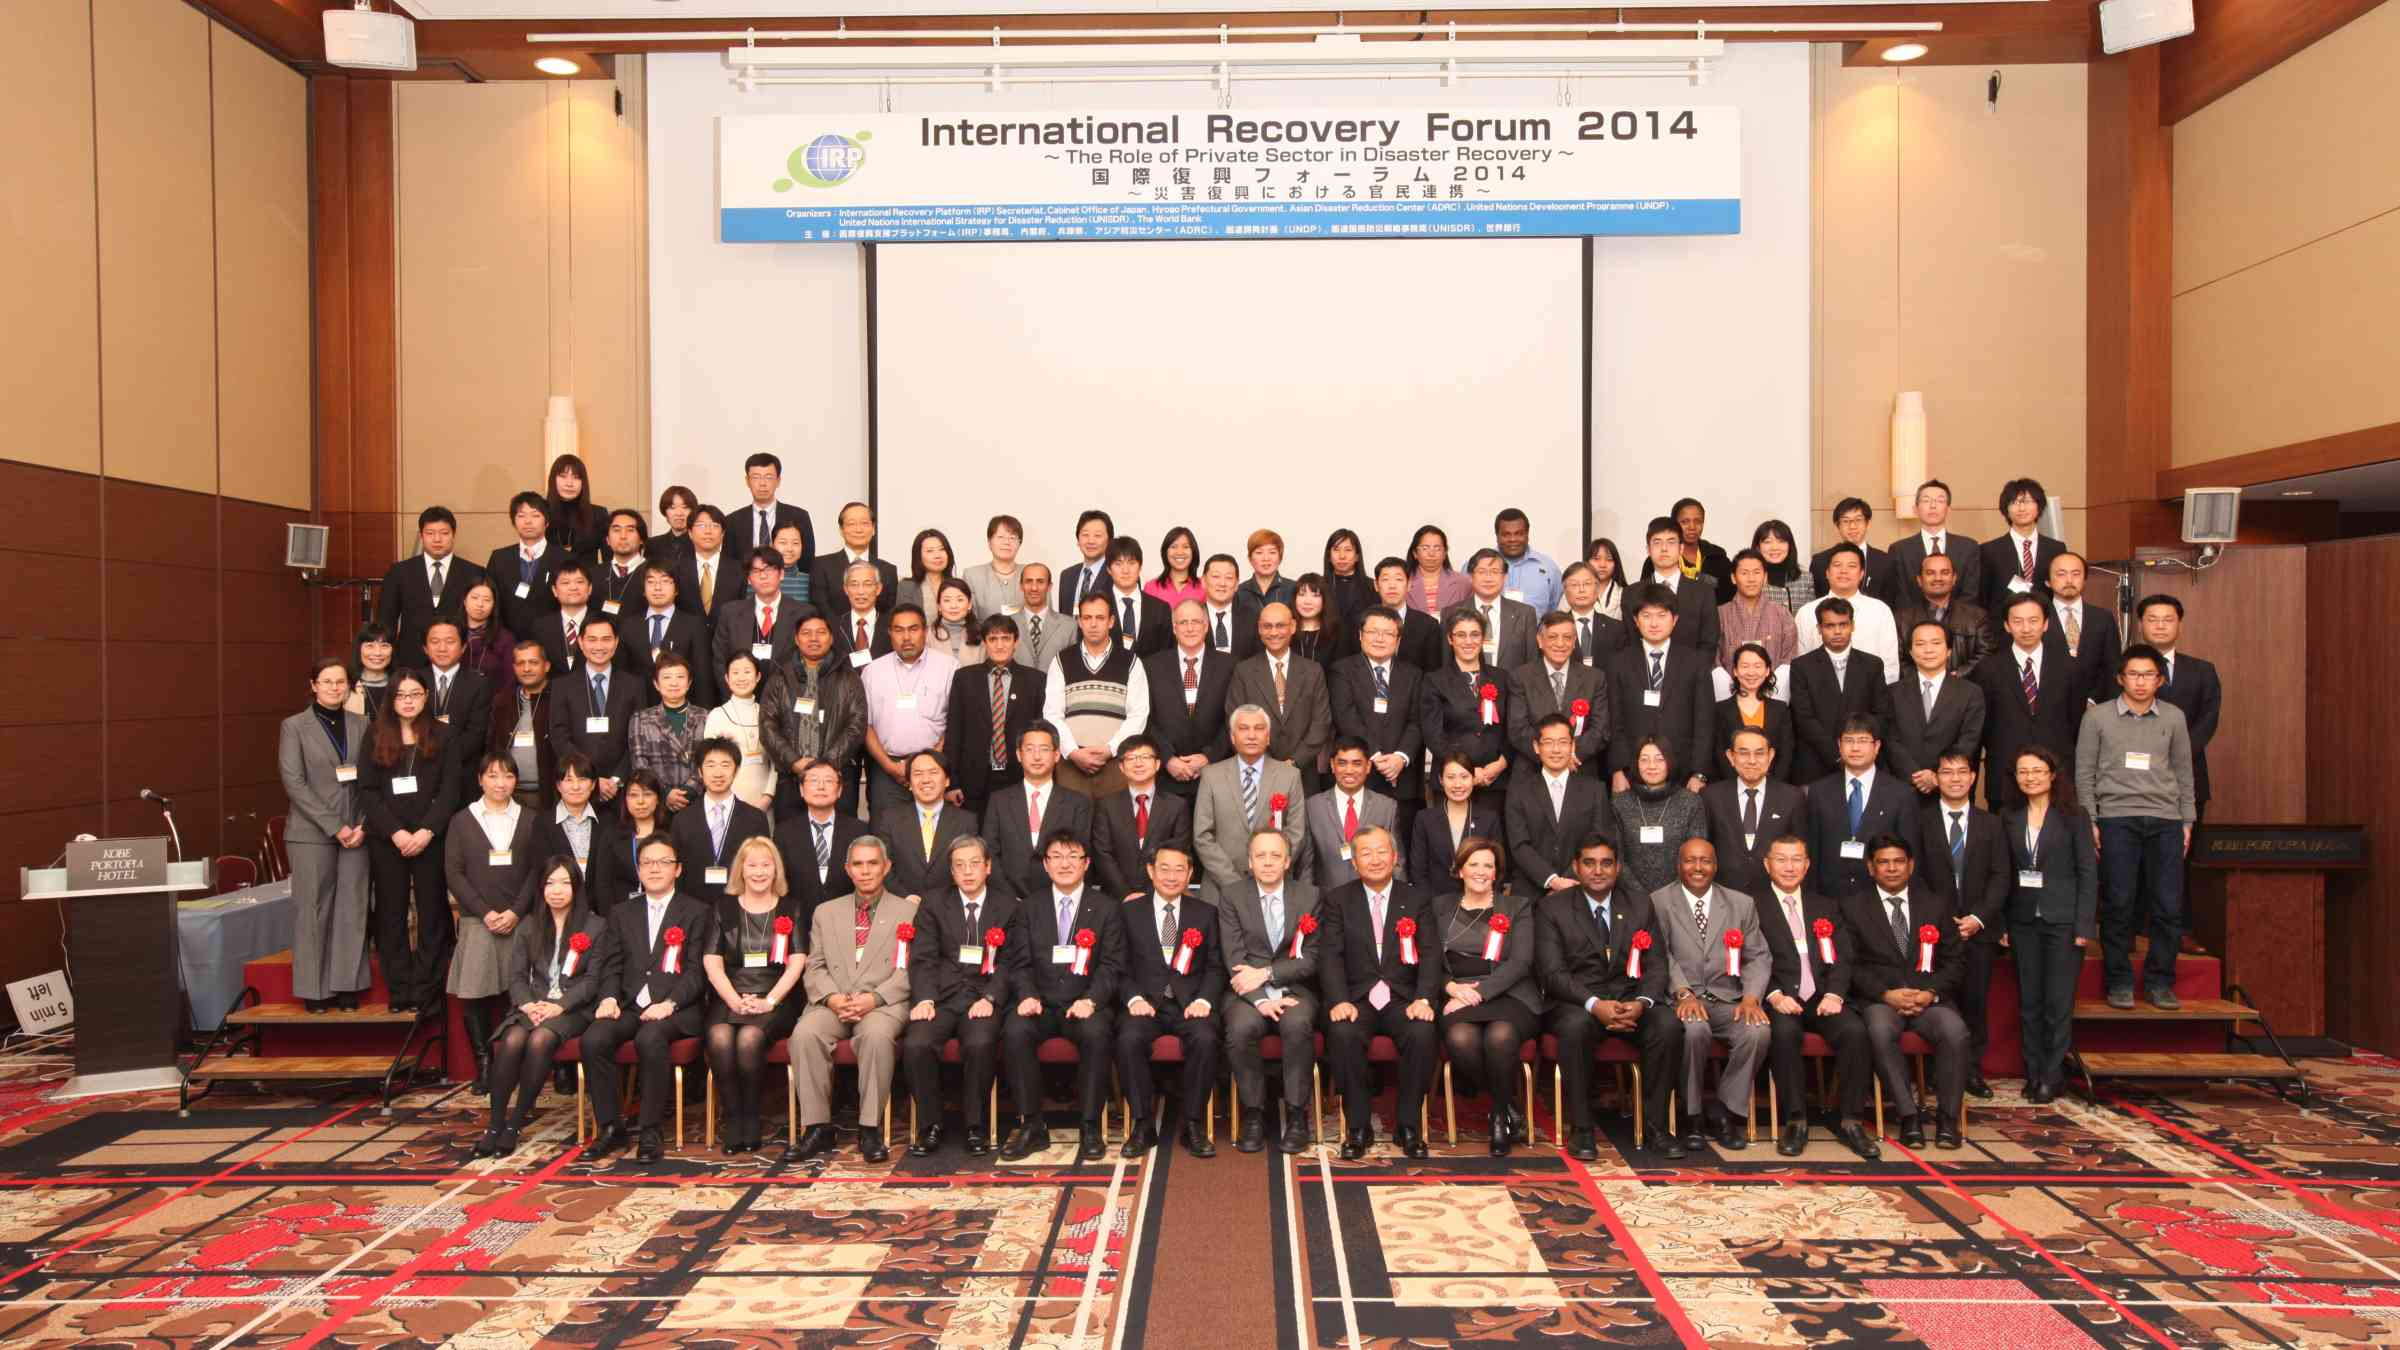 IRF2014 Group Photo